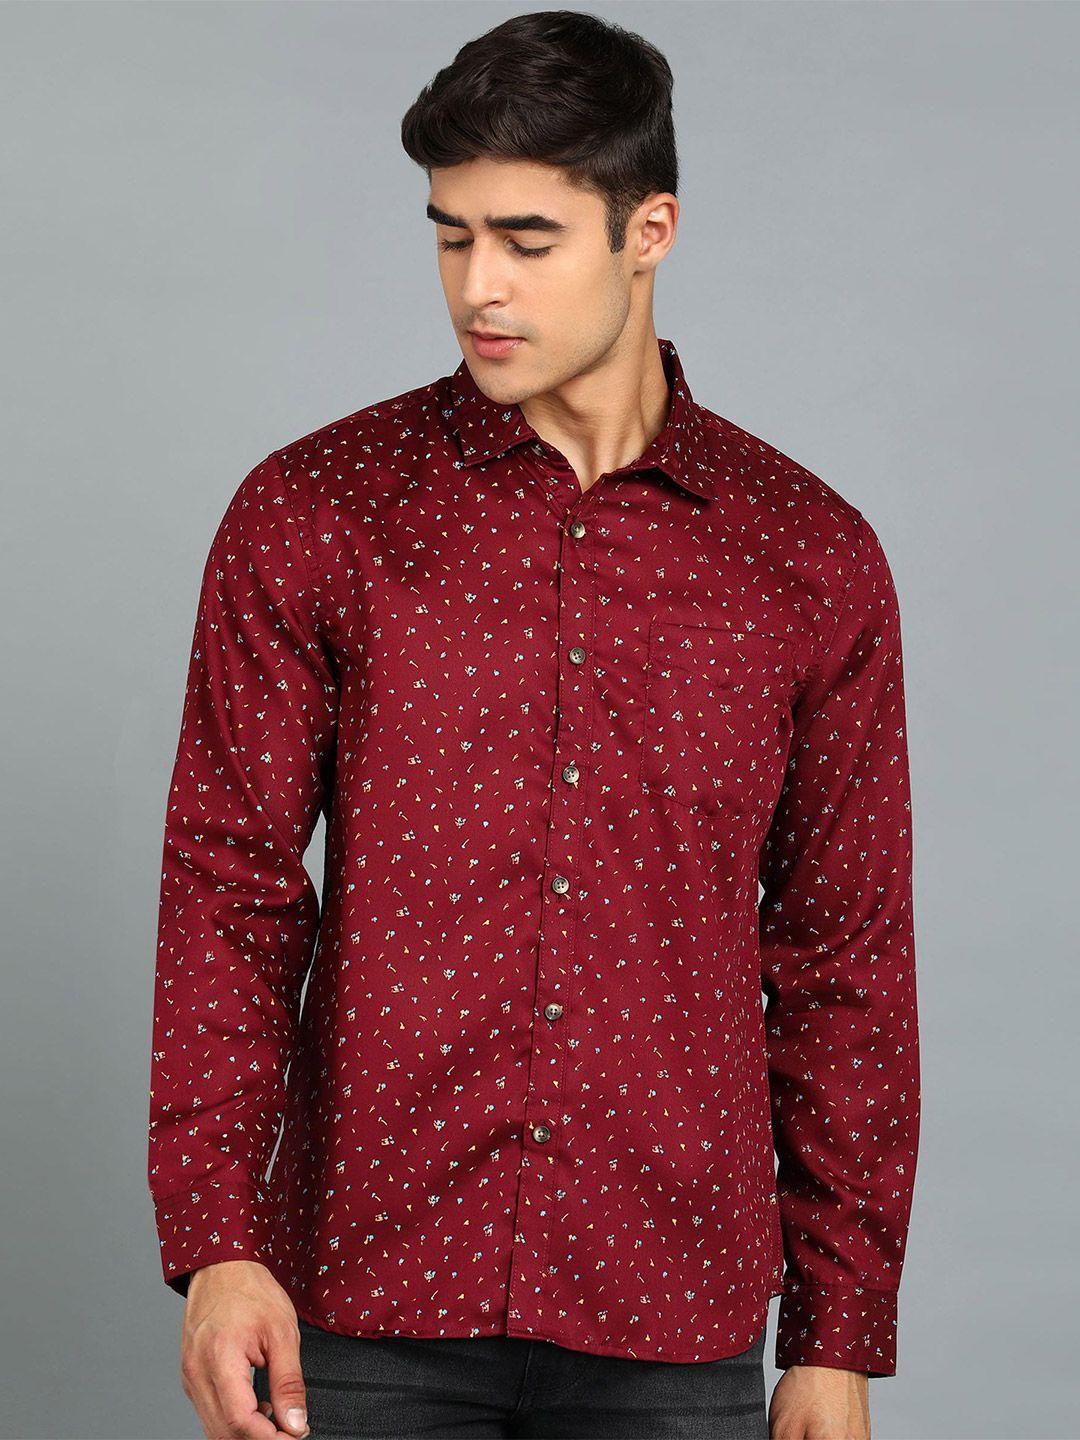 urbano fashion floral printed pure cotton shirt